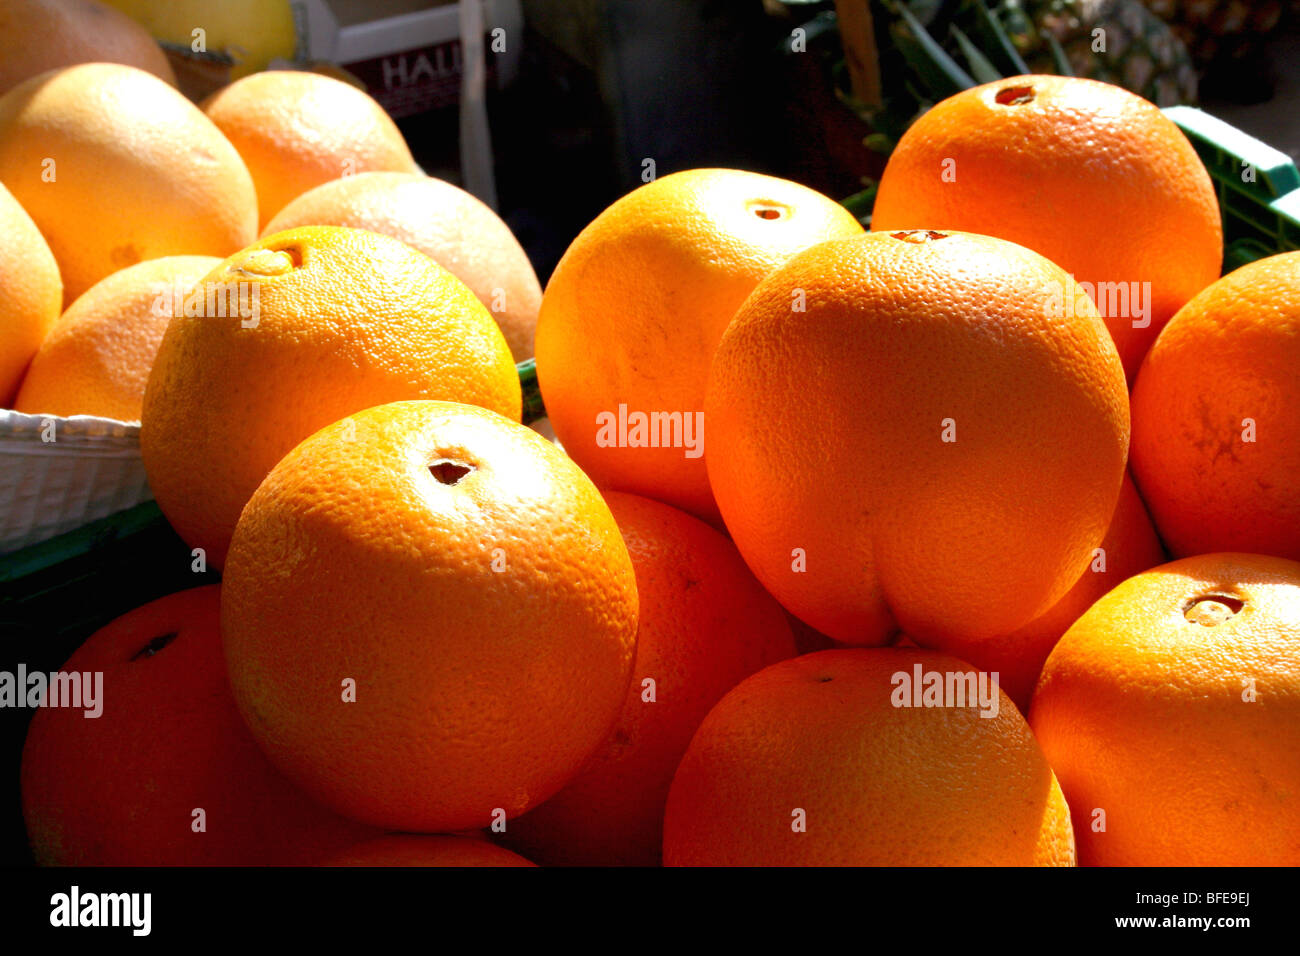 Oranges a Citrus fruit rich in Vitamin C in the Family Rutaceae Stock Photo